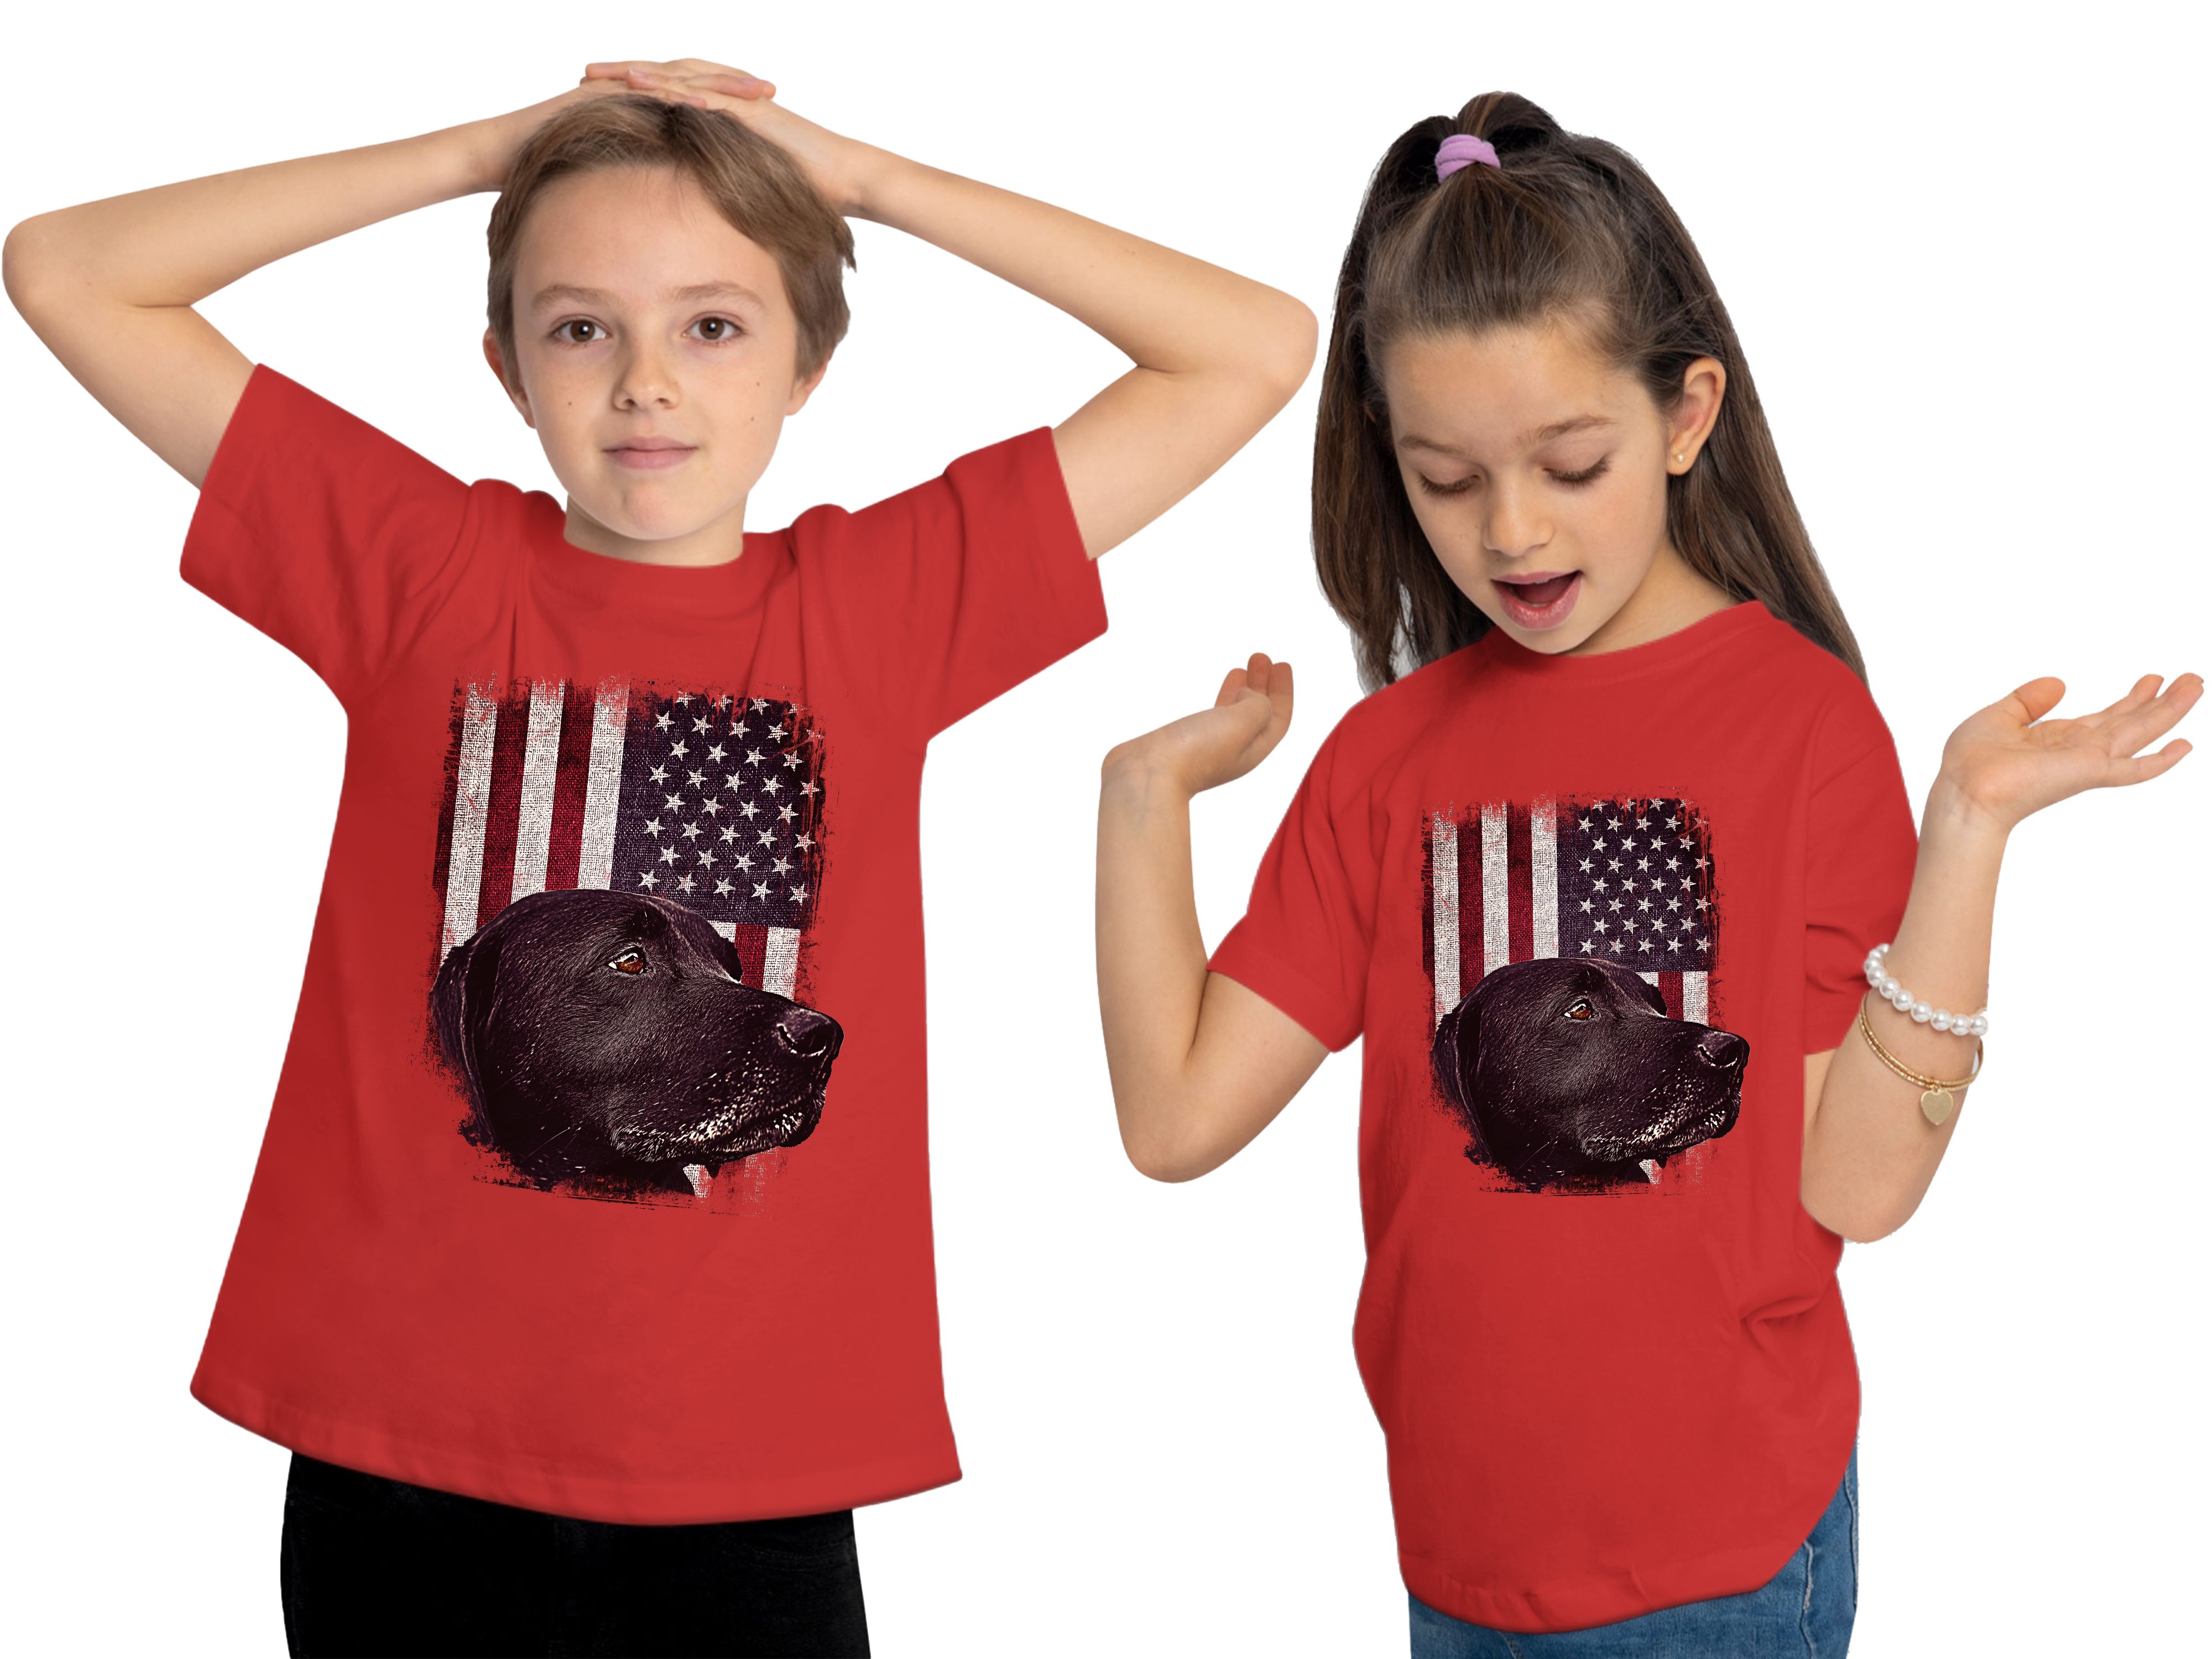 MyDesign24 T-Shirt Kinder Hunde - vor Aufdruck, Print Shirt rot i246 bedruckt Labrador schwarzer USA mit Flagge Baumwollshirt